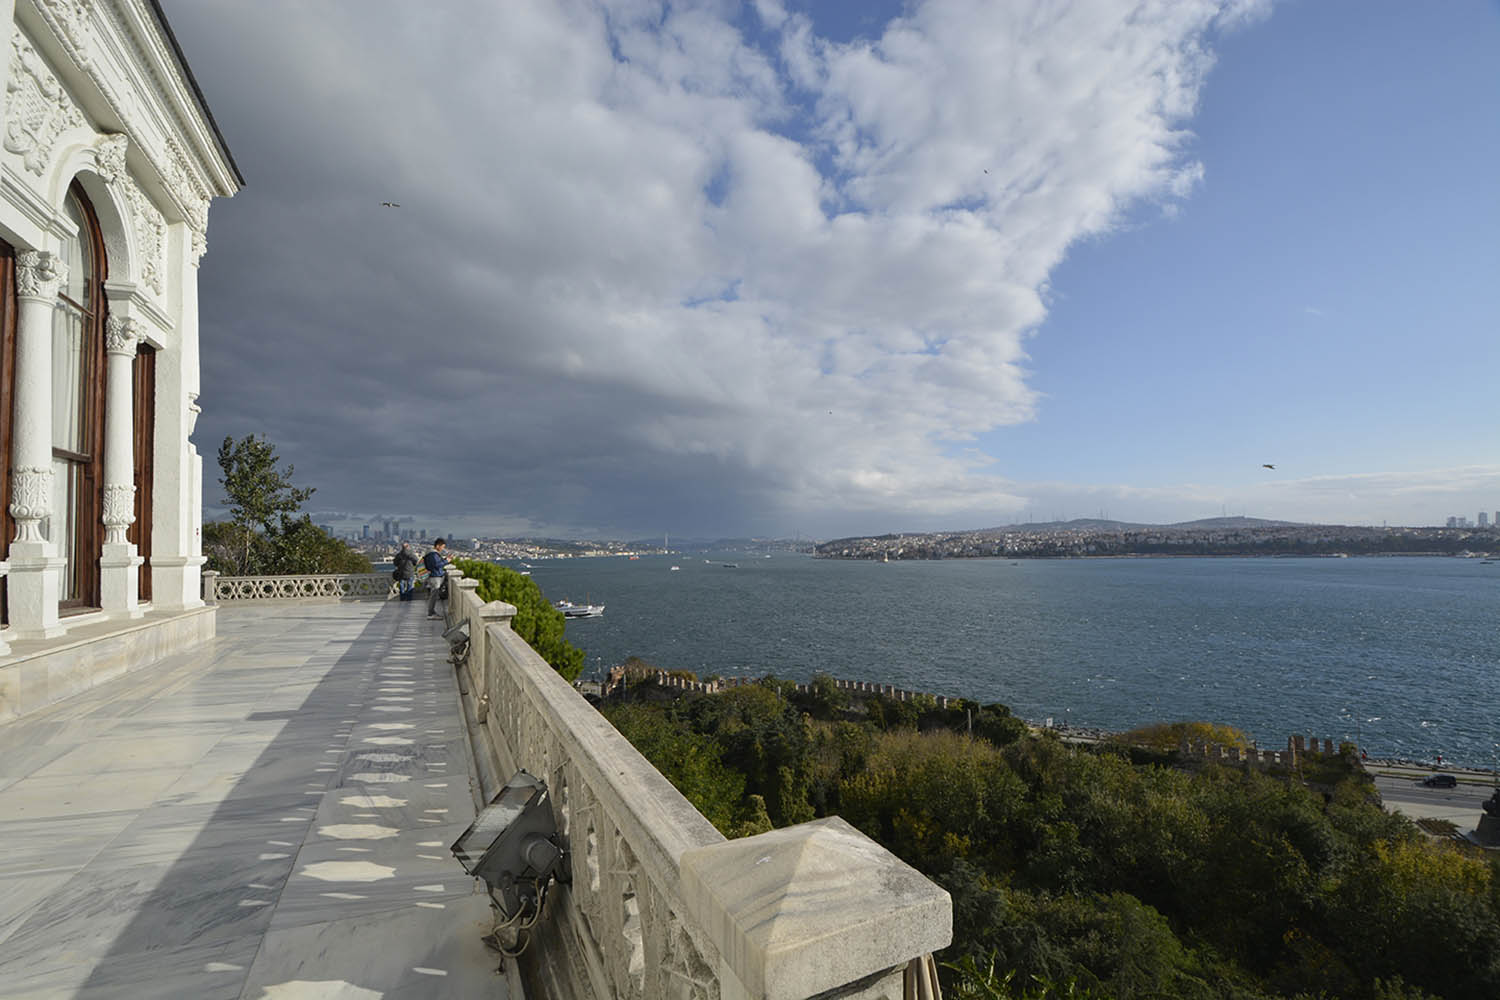 View of the Marmara Sea from the Mecidiye Köşkü.